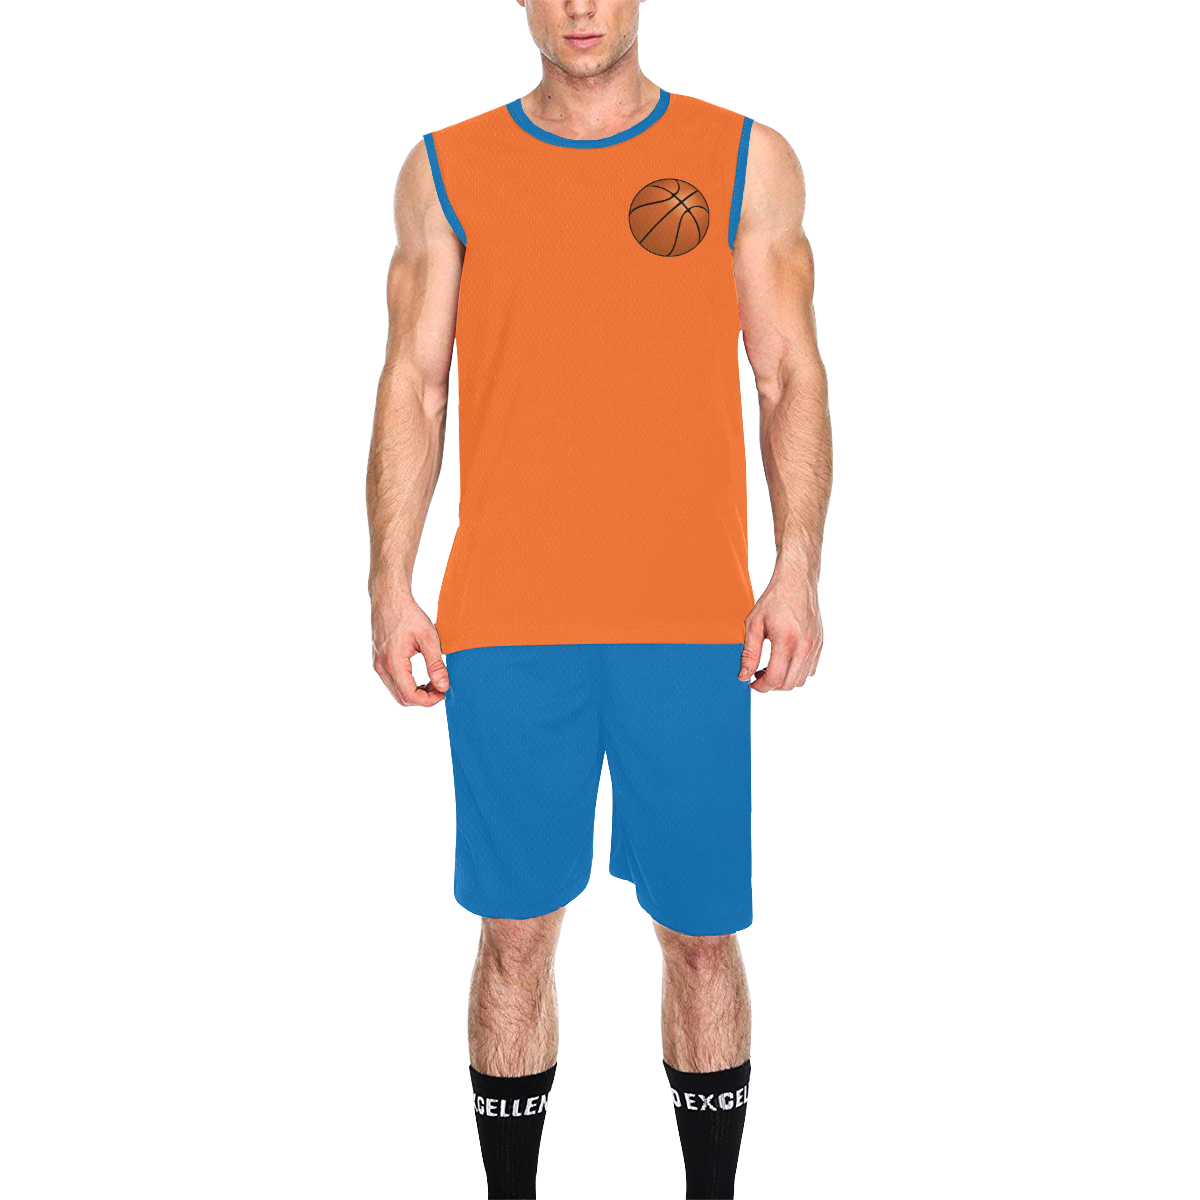 Basketball Sports Cyan Blue and Orange All Over Print Basketball Uniform